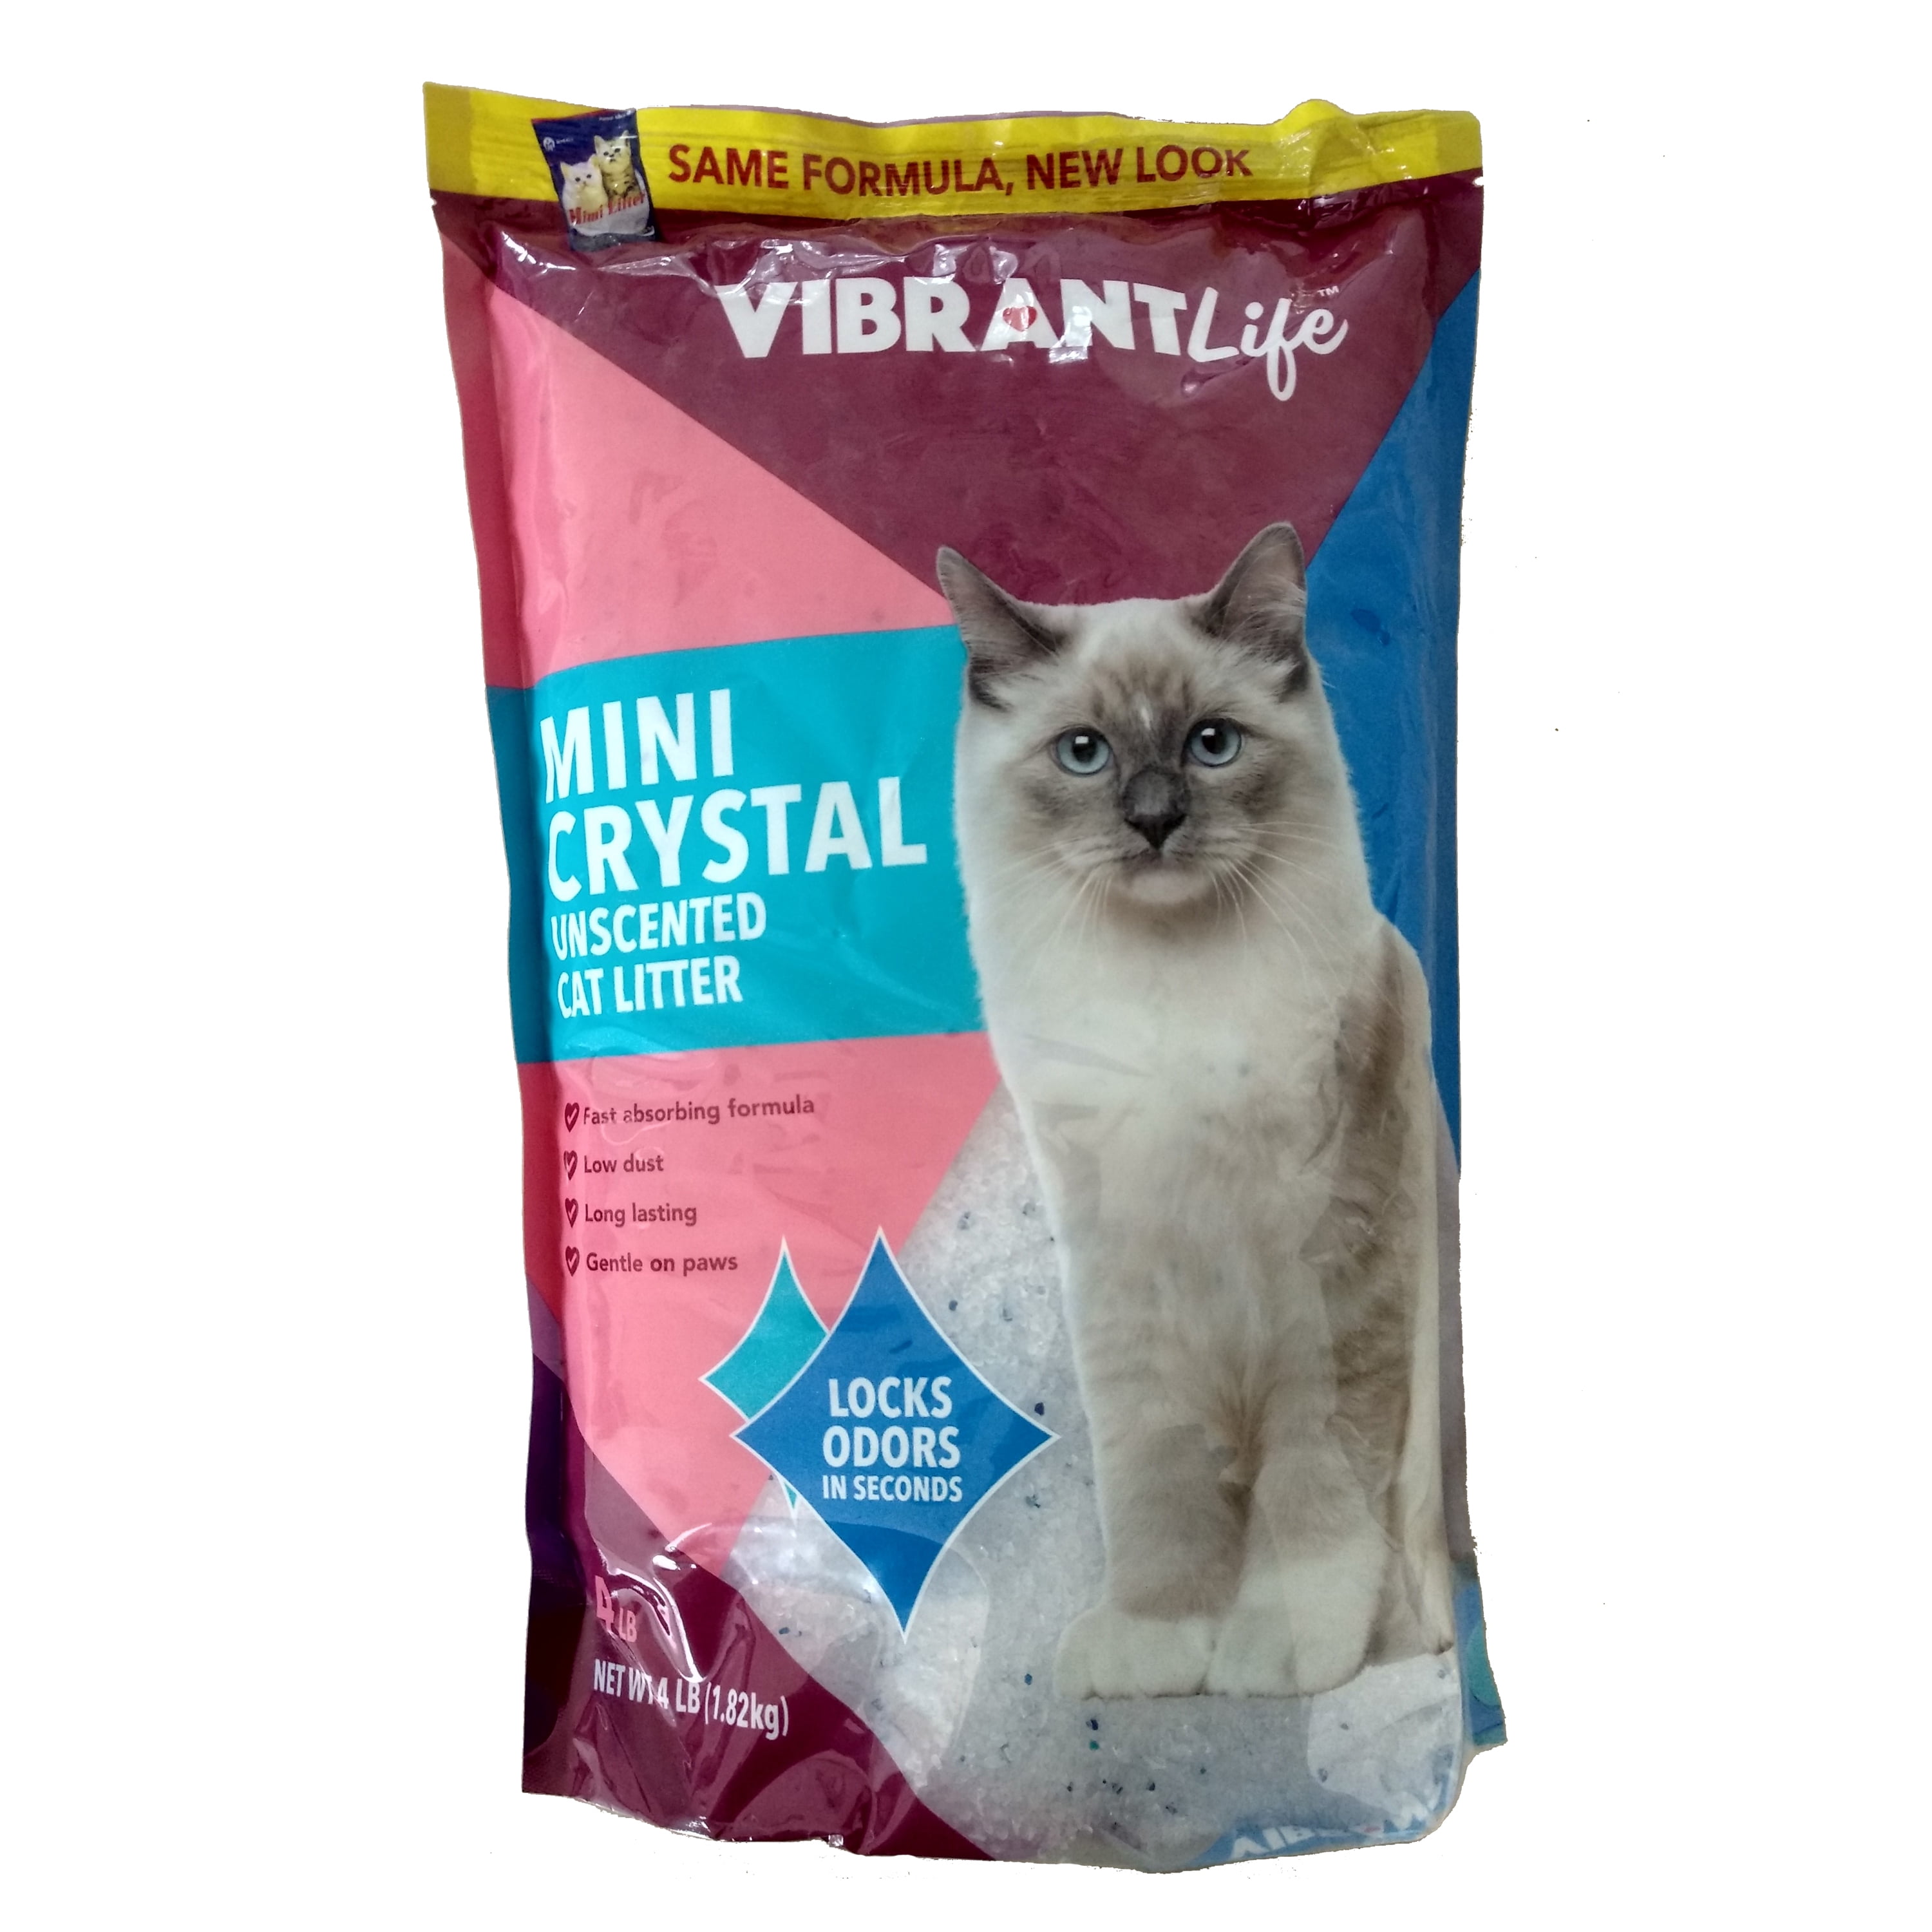 Vibrant Life ® Mini Crystal Unscented Cat Litter 4 lb 4 PACK eBay